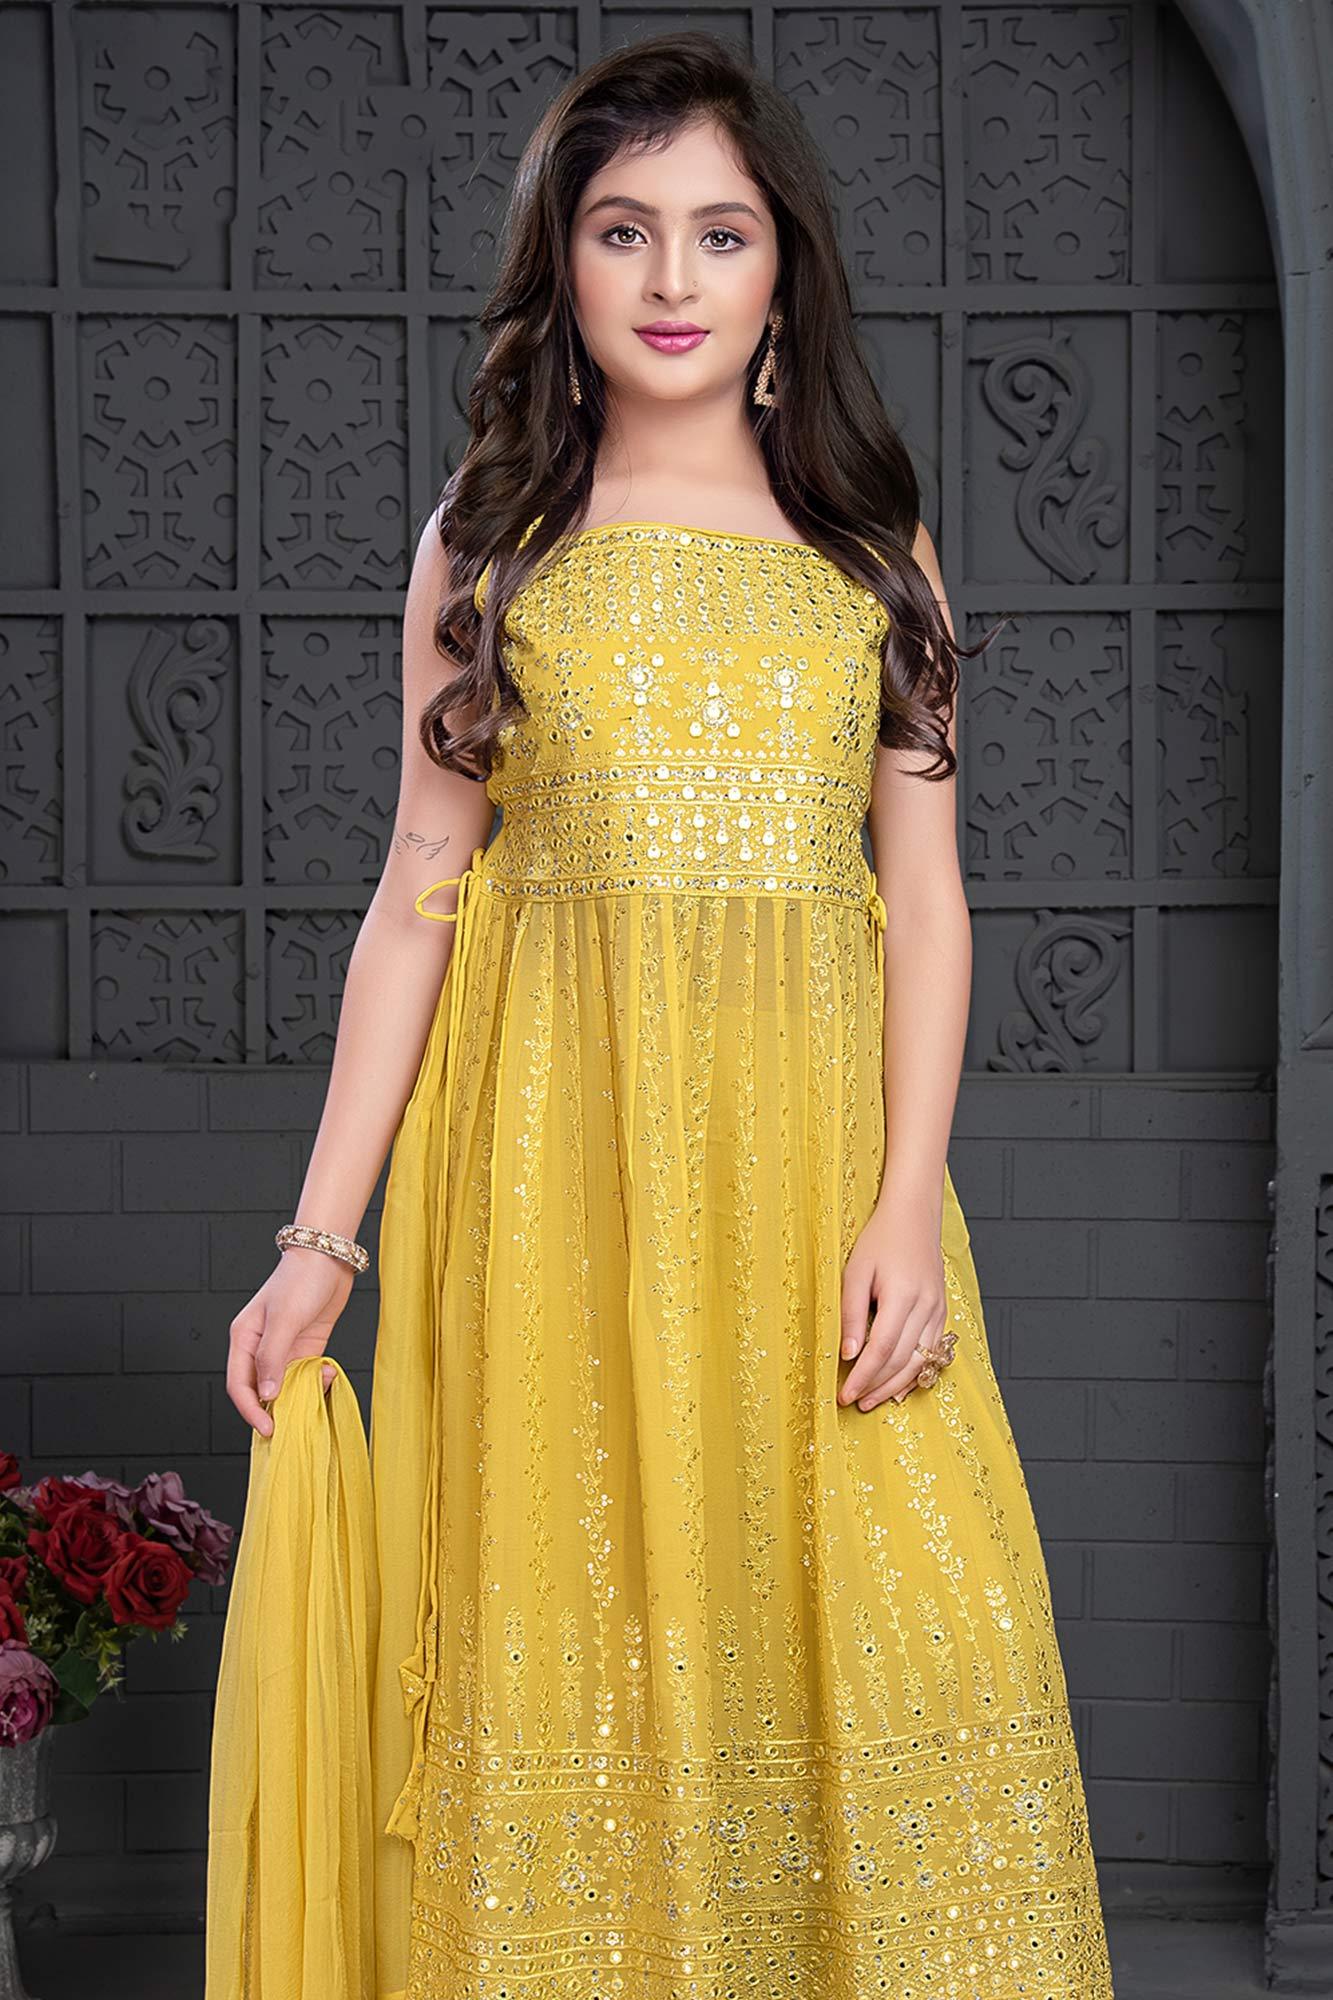 Girls Palazzo Top Dress, 160 Gsm at Rs 270/set in Mumbai | ID: 2849358210562